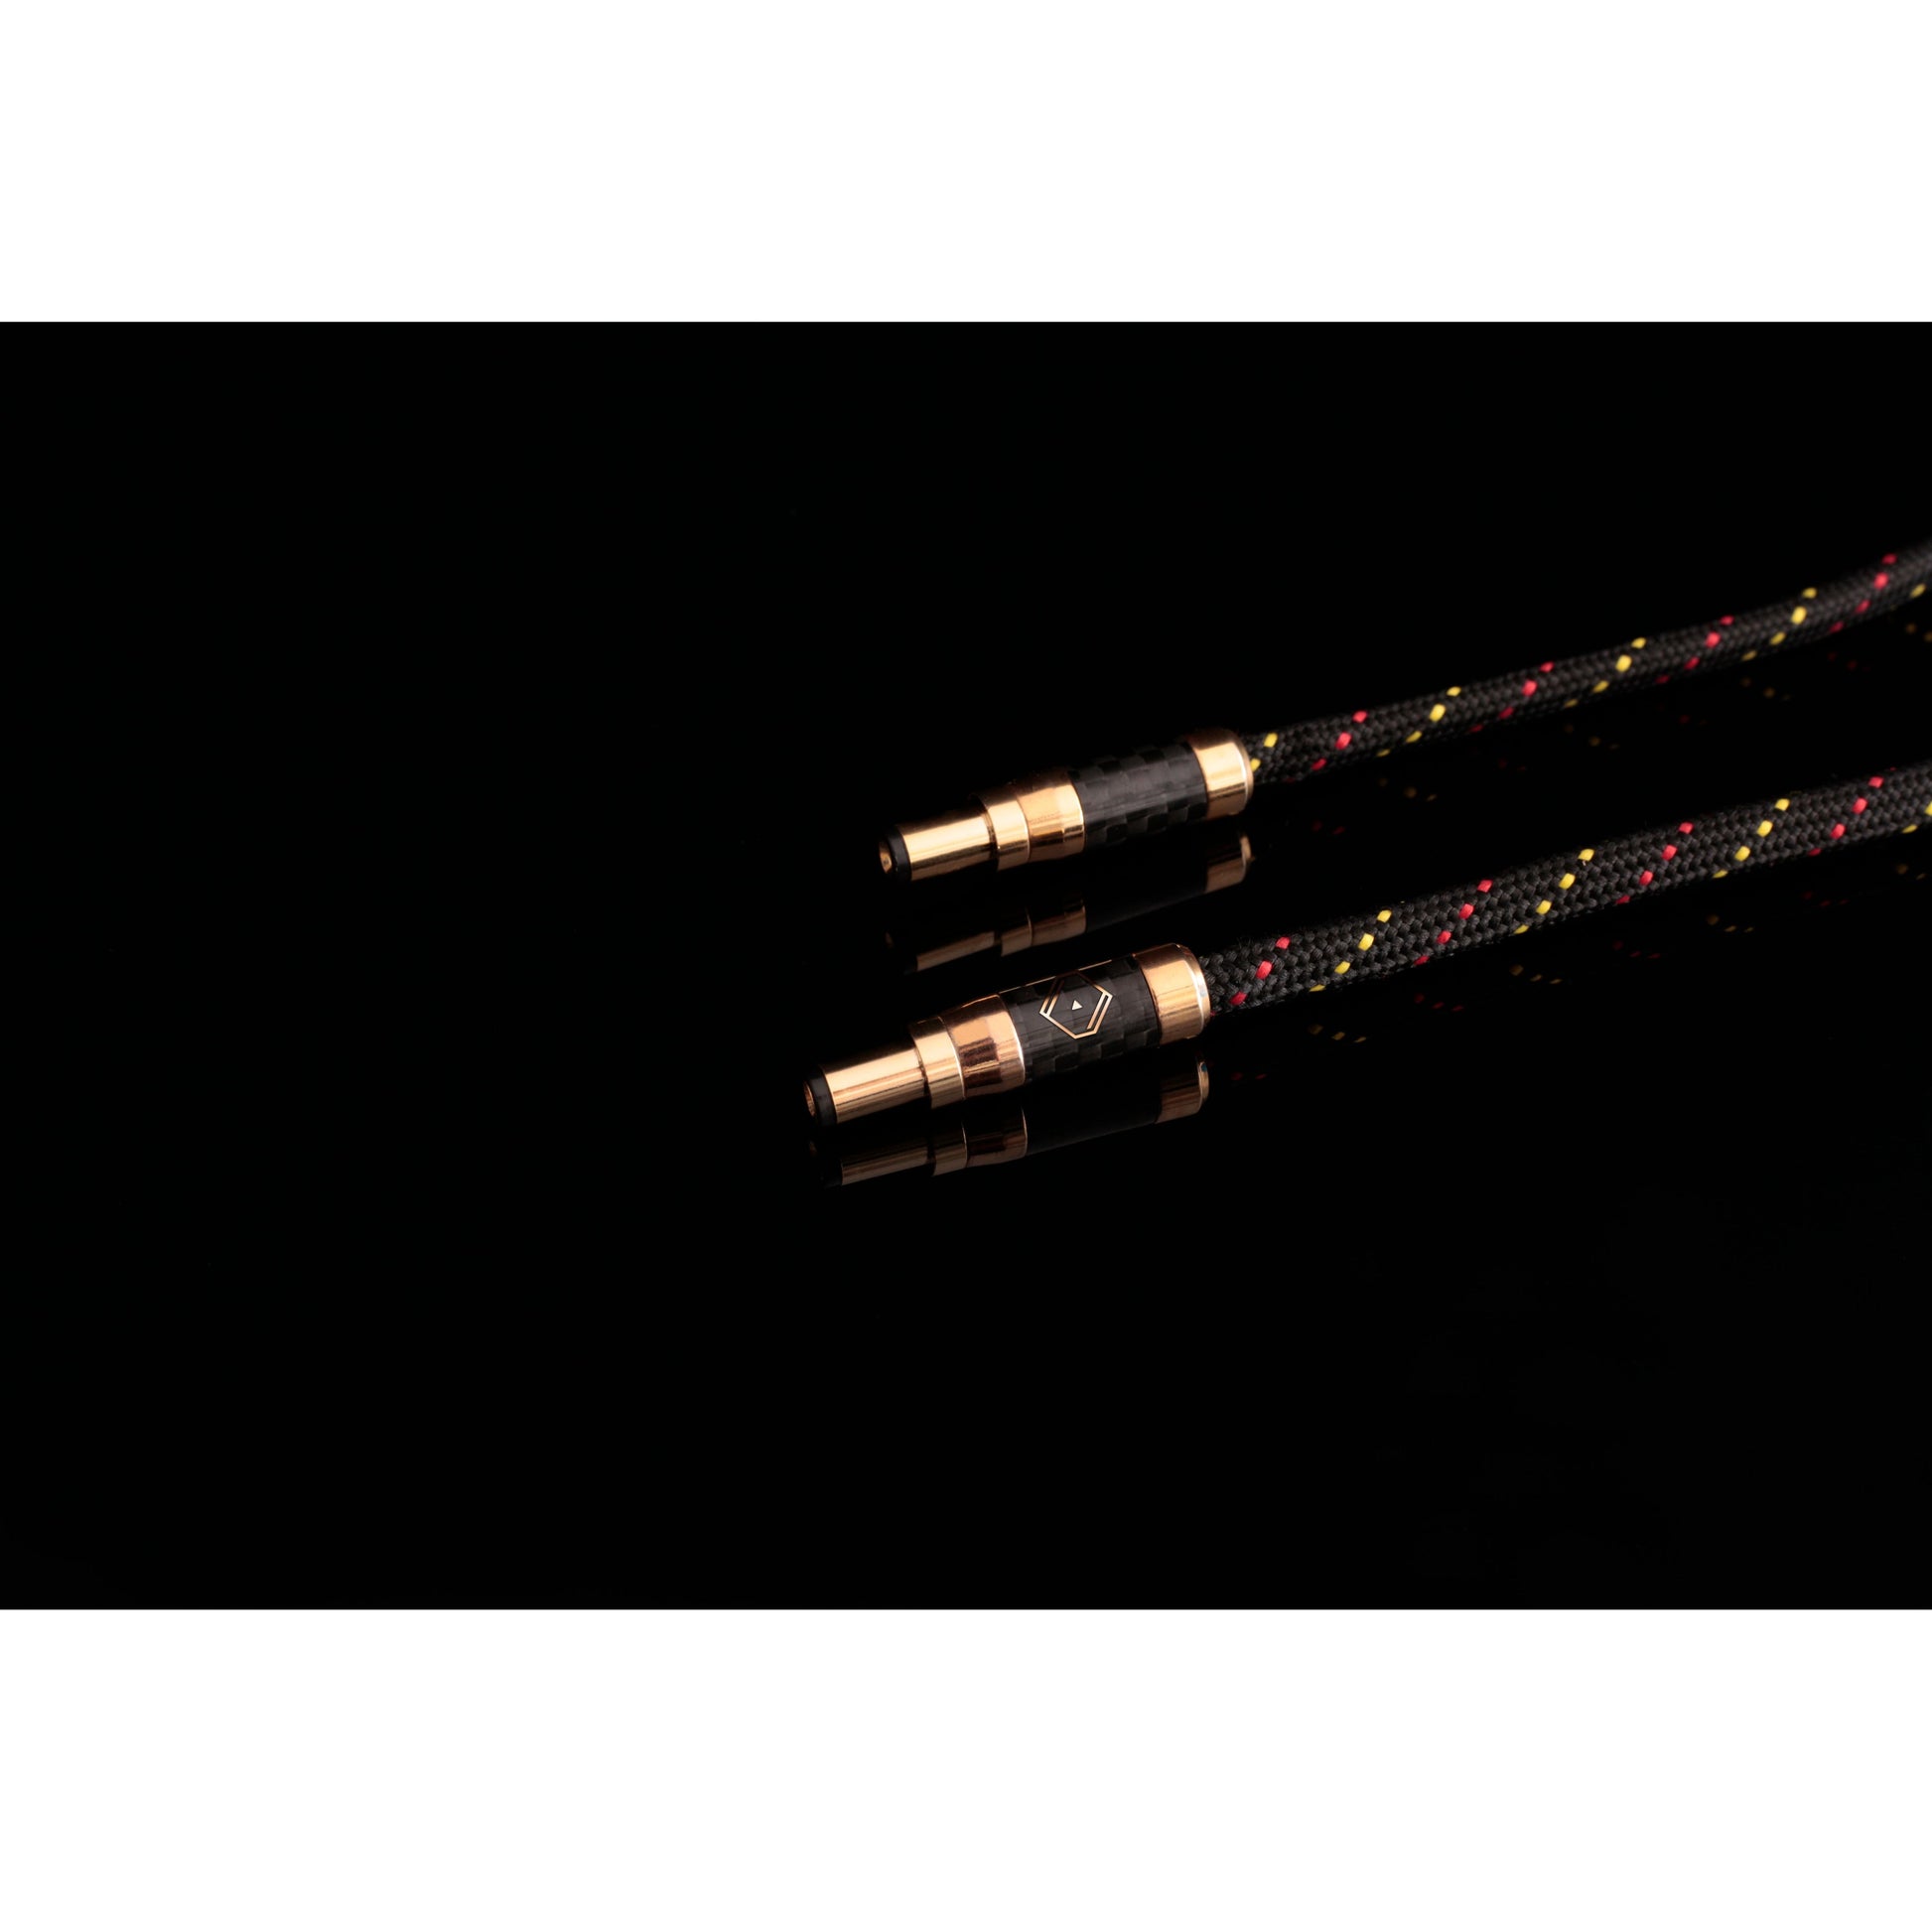 Bastei Cables - Black Tiramisu